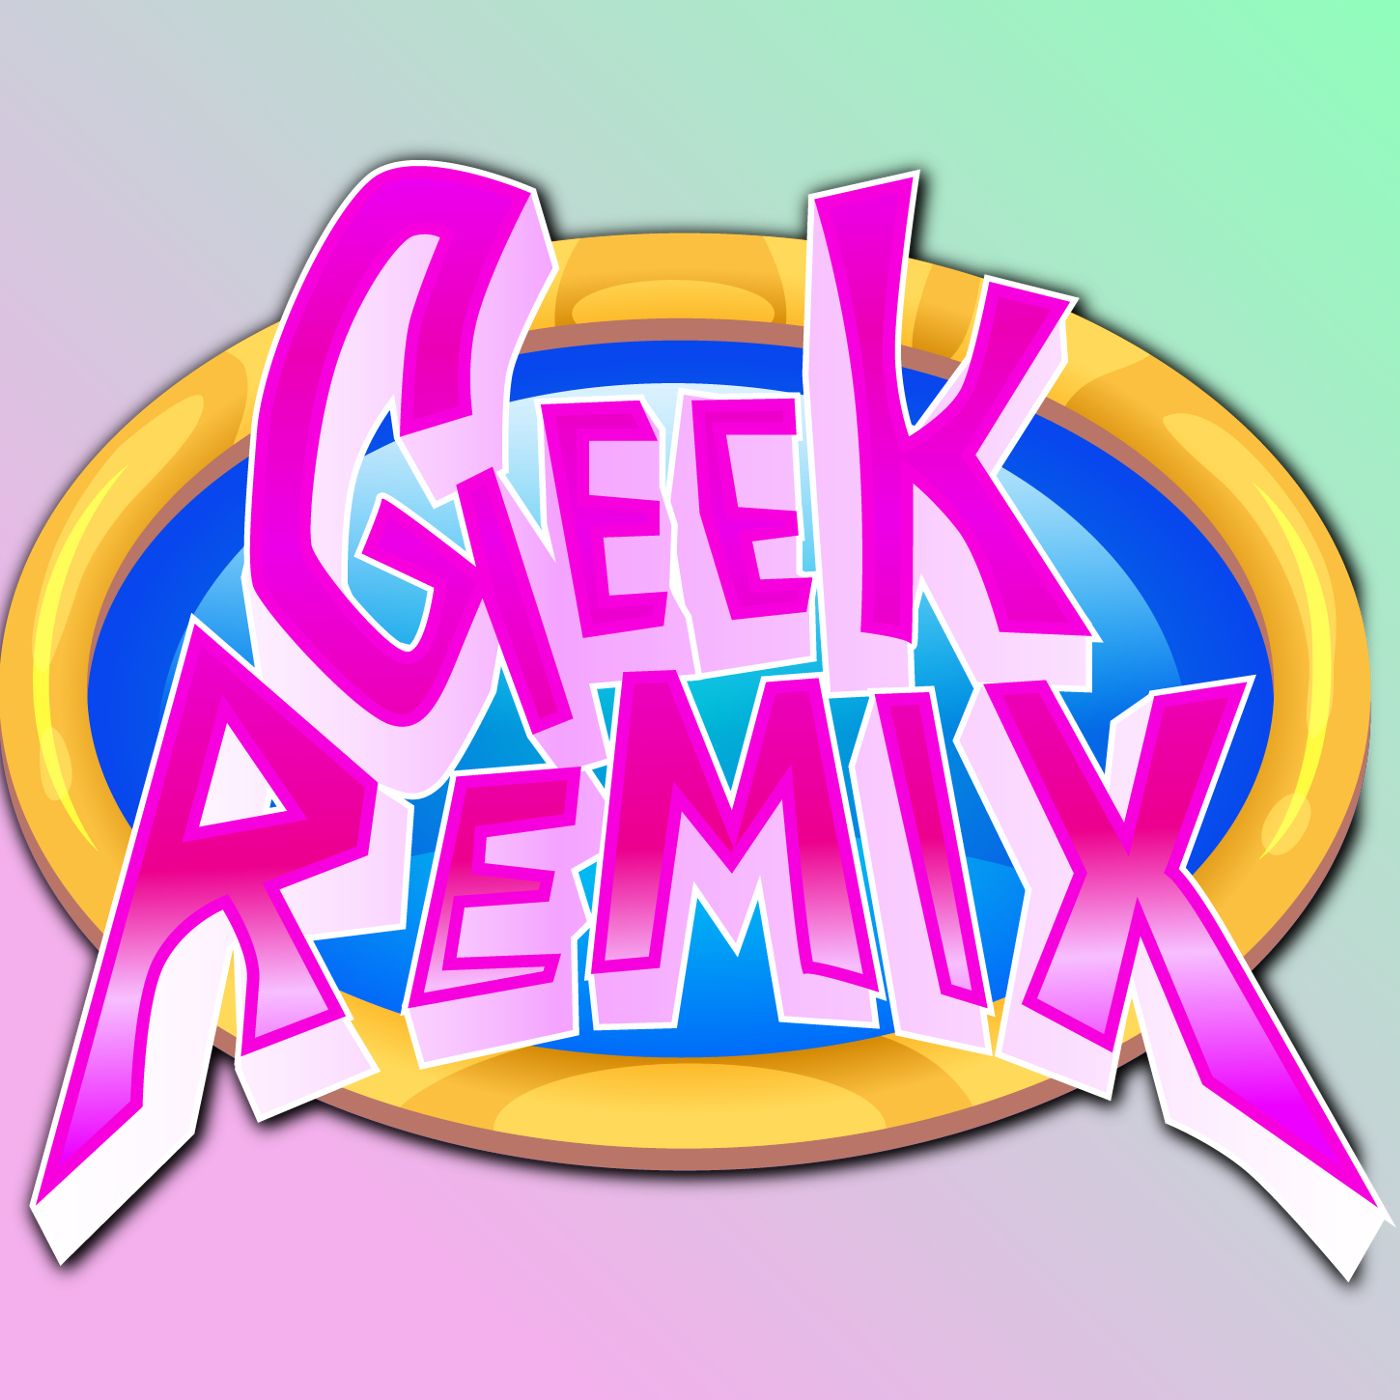 Geek remix stacy 